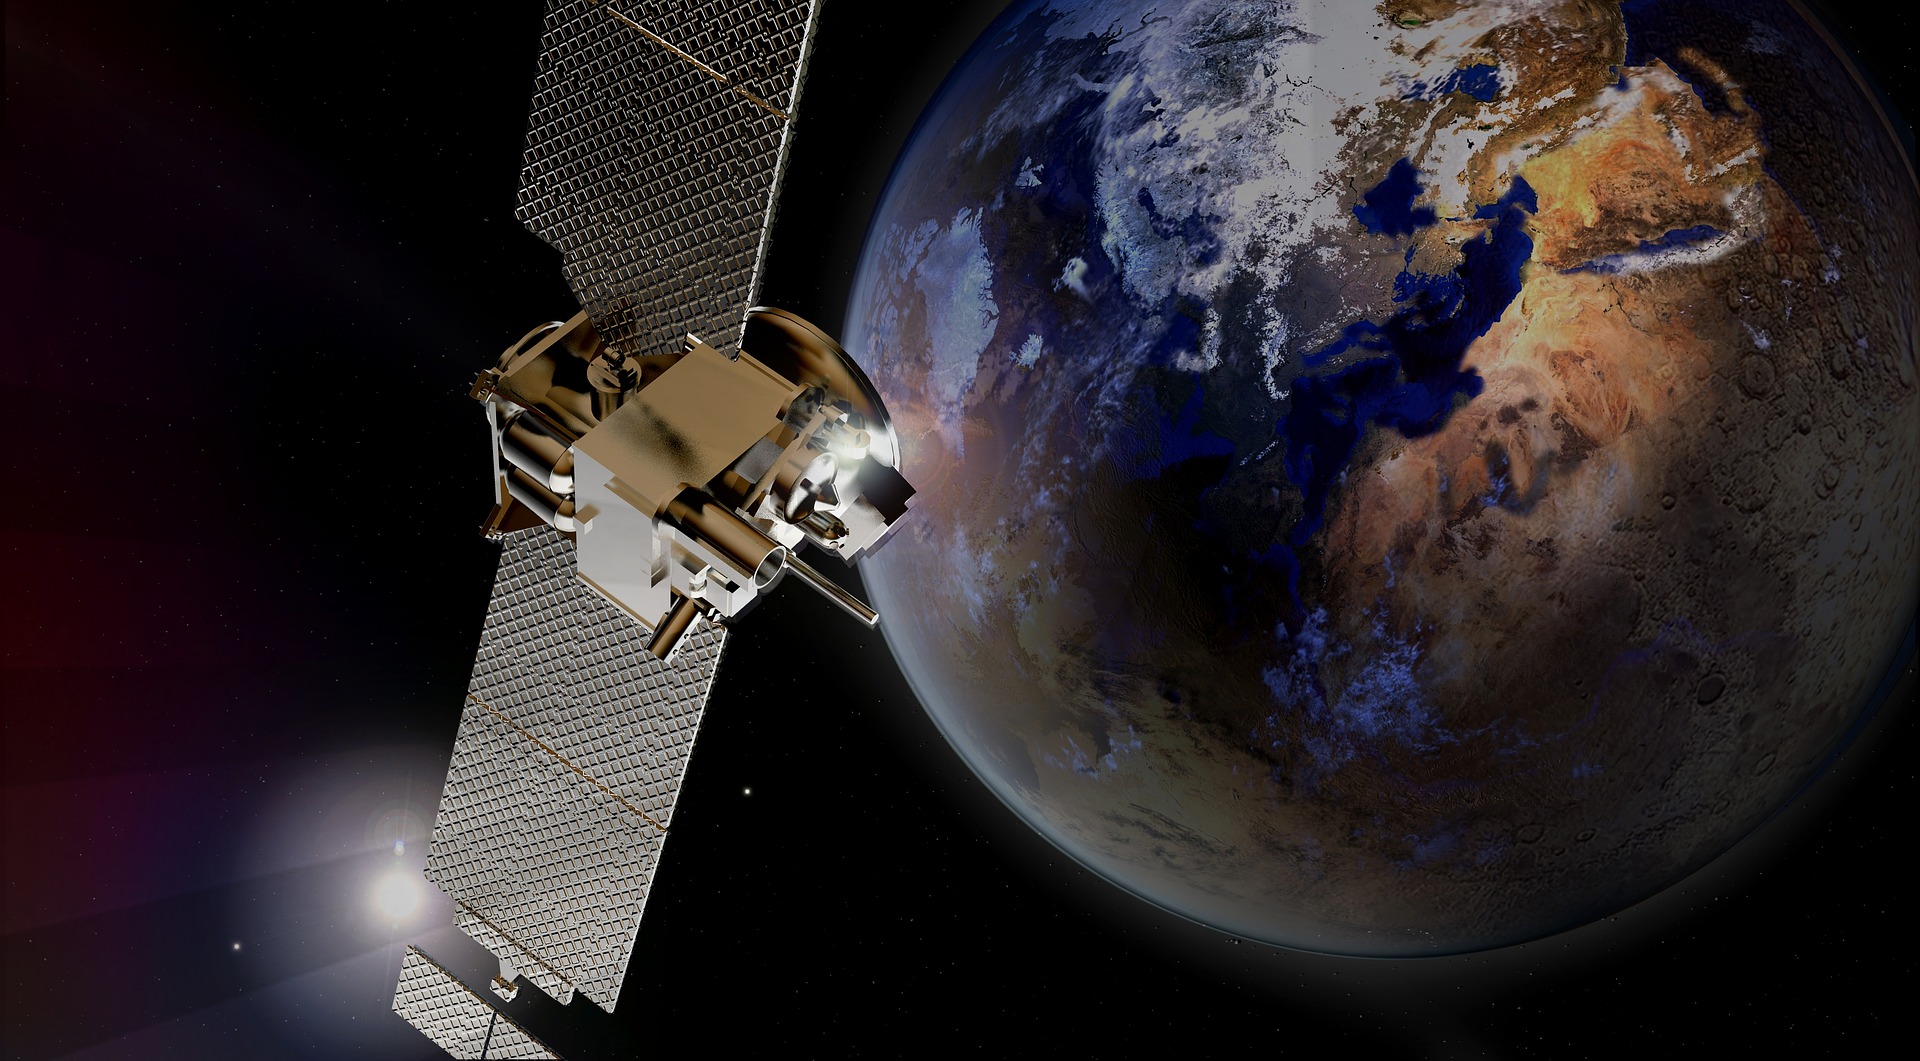 Satellogic chooses the Netherlands for satellite production facility